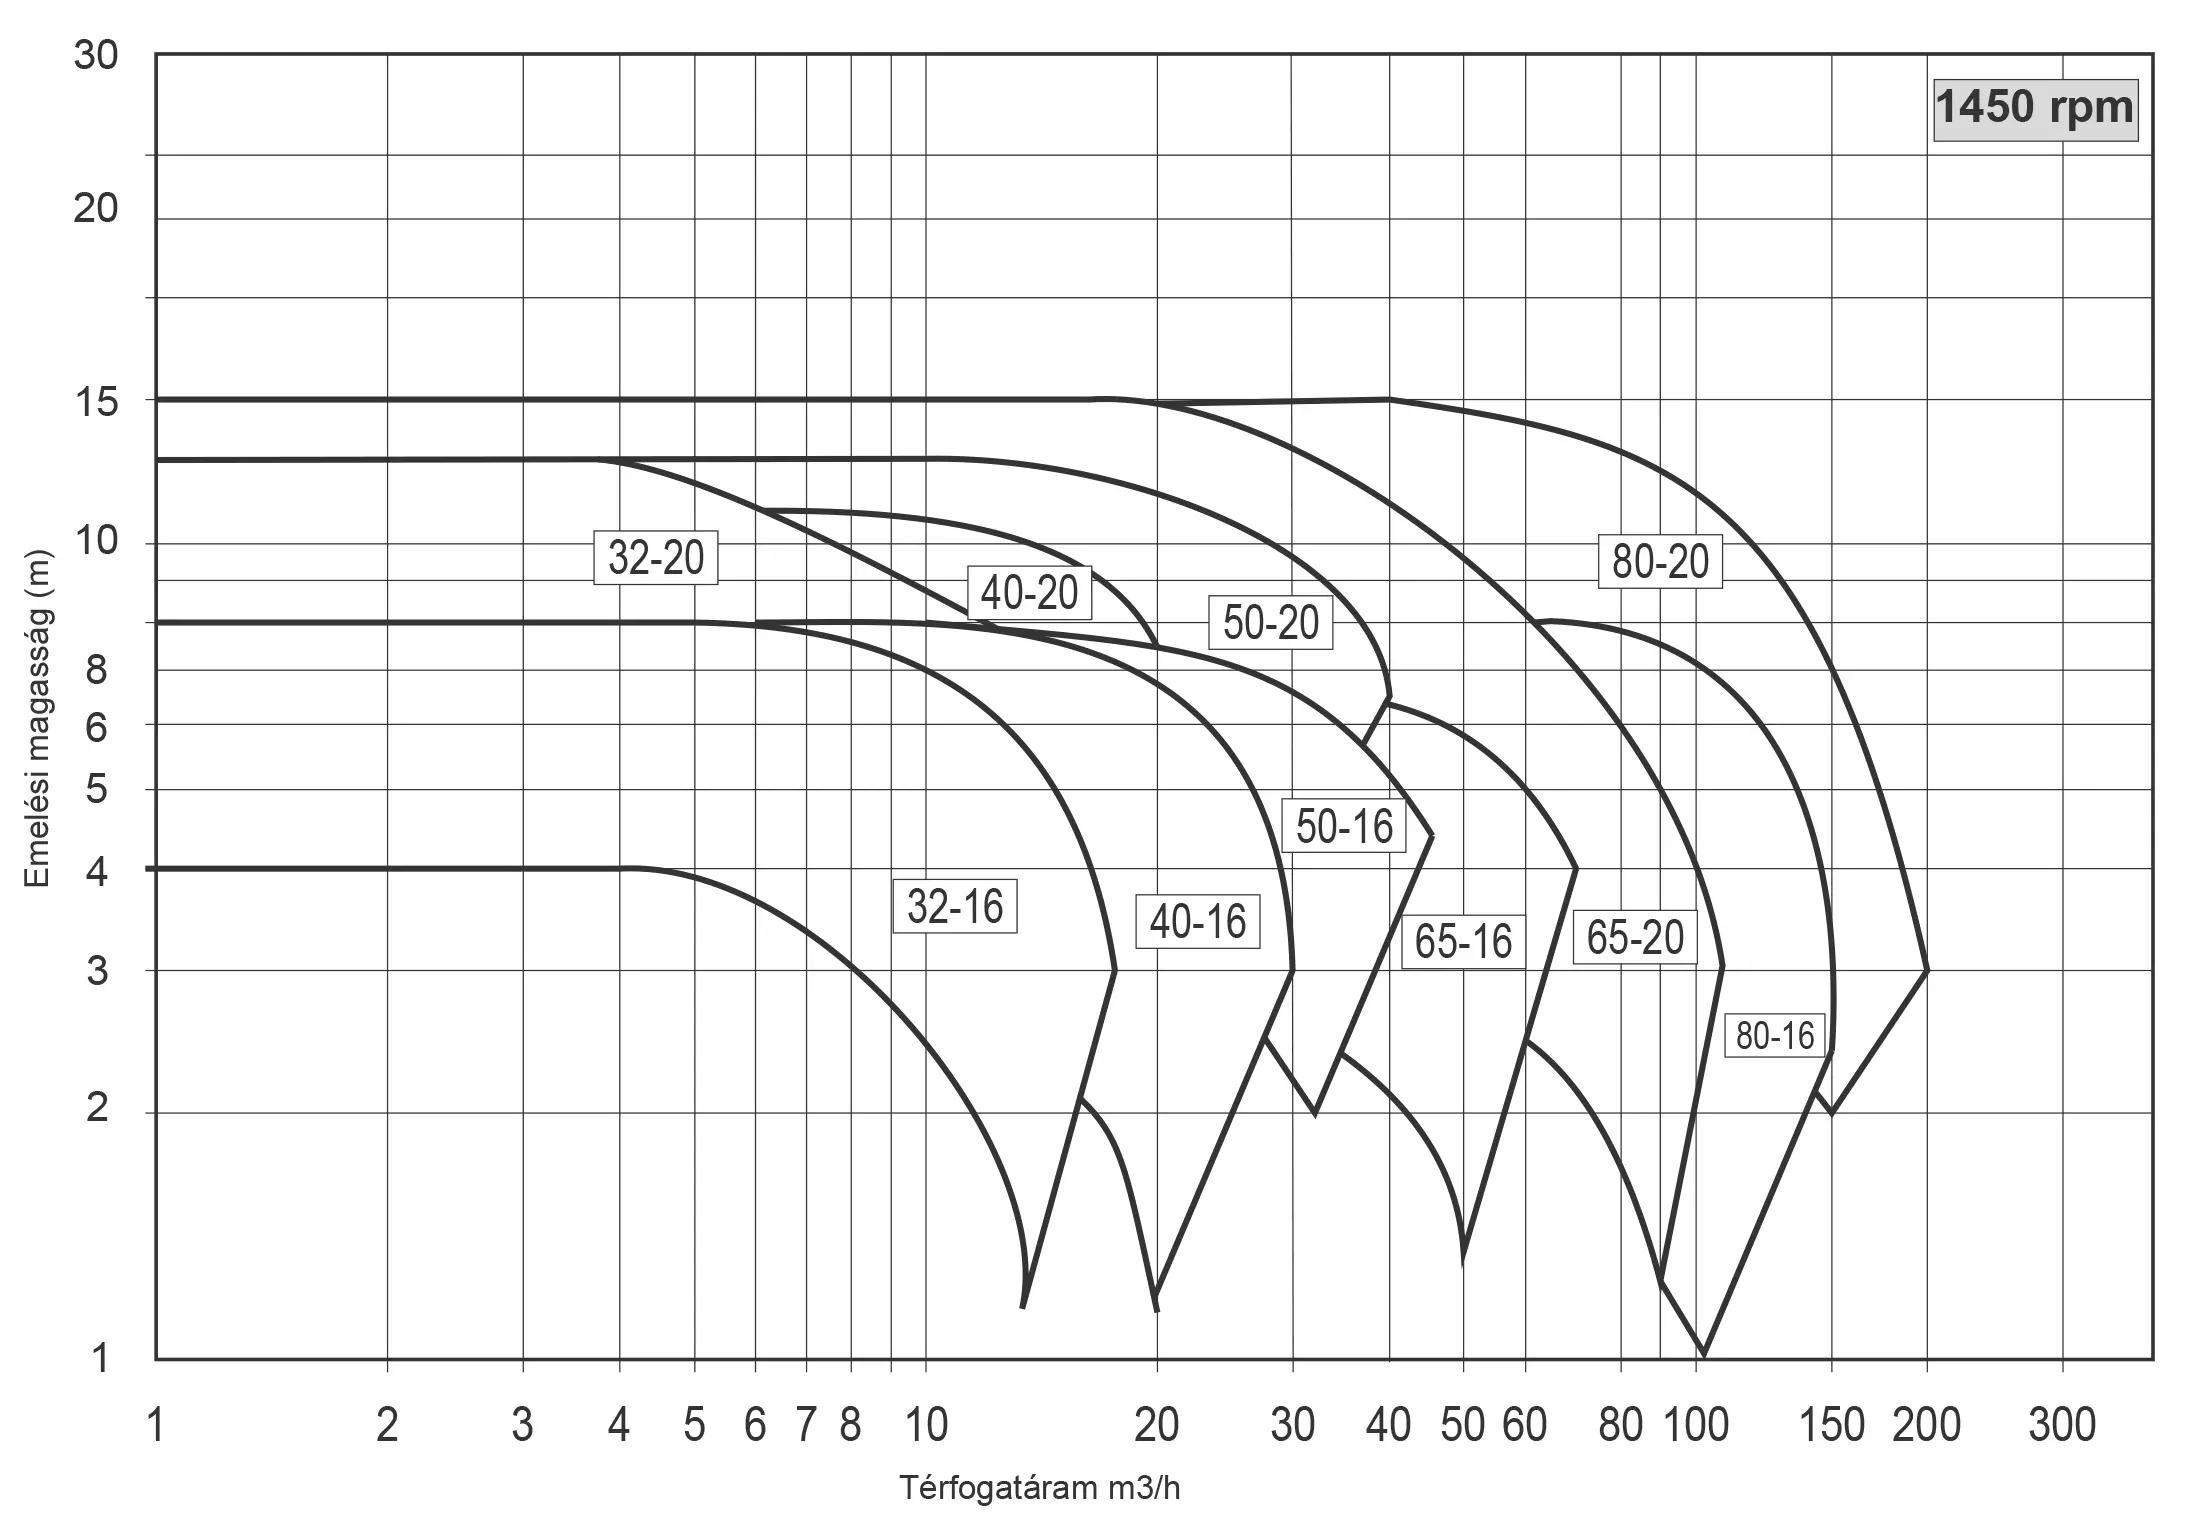 HG Performance curves